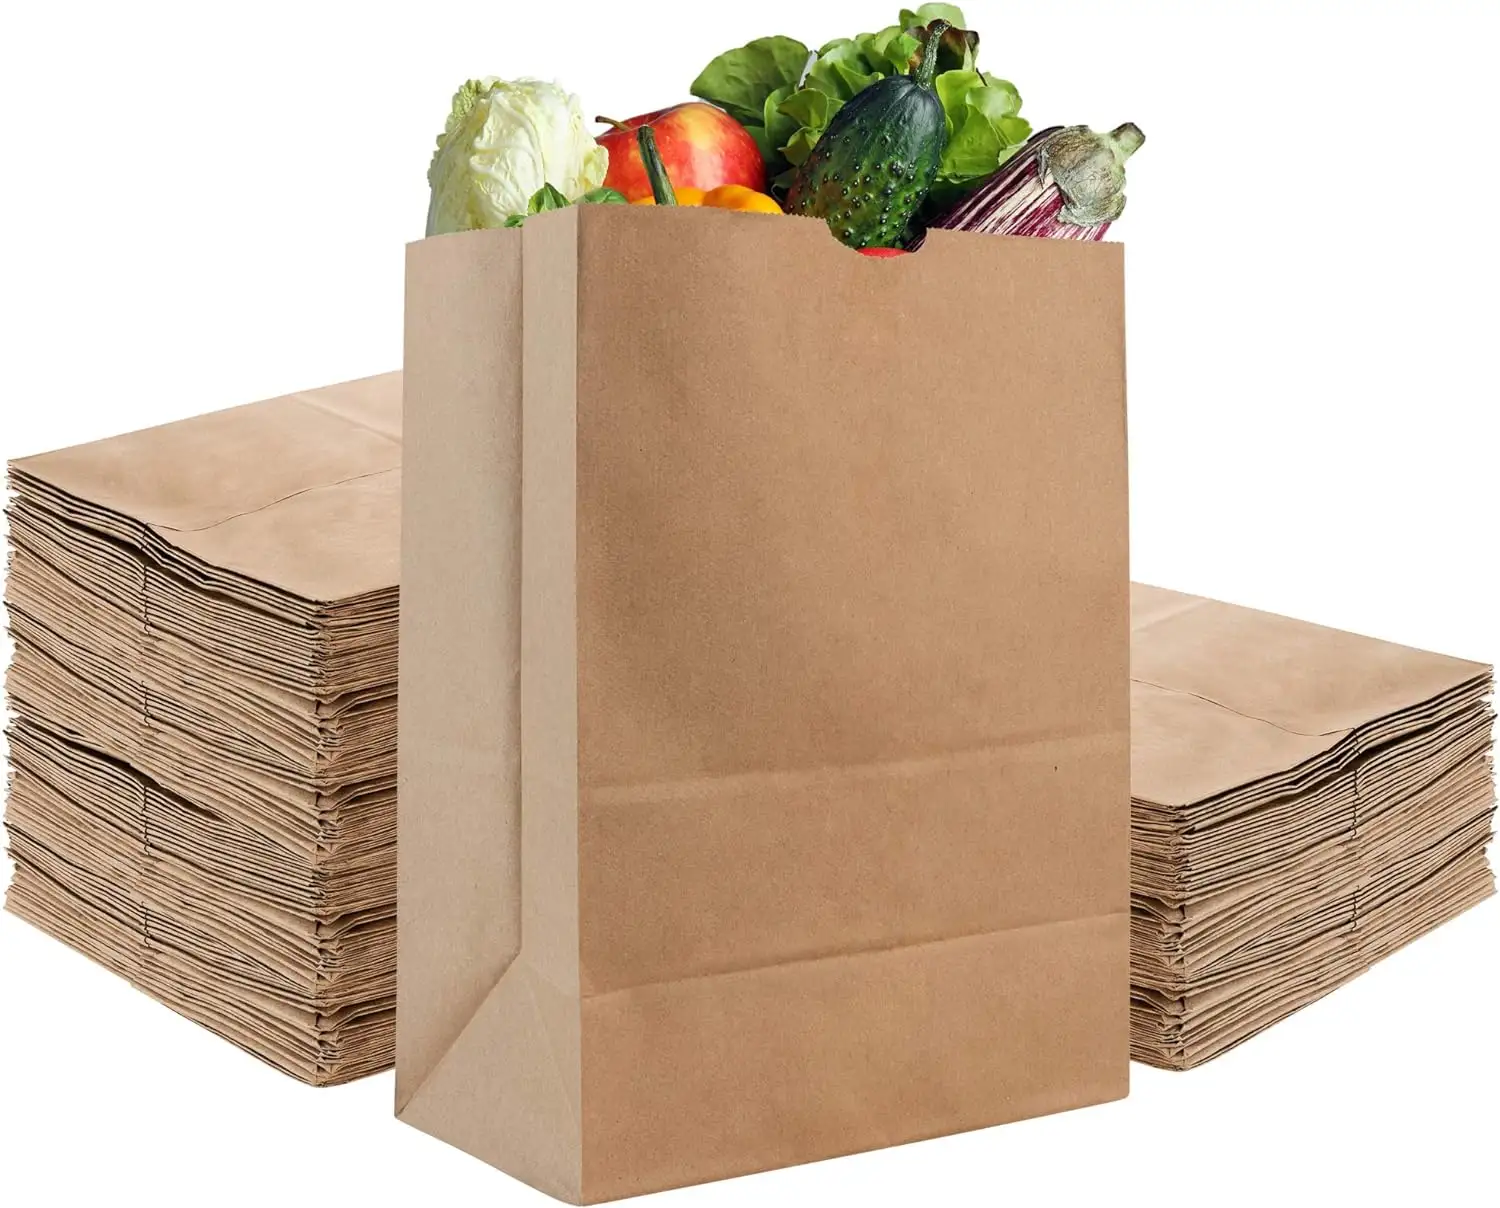 52 Lb Kraft Brown Paper Bags 100 Count Kraft Brown Paper Grocery Bags Bulk Large Paper Bags for Grocery Shopping